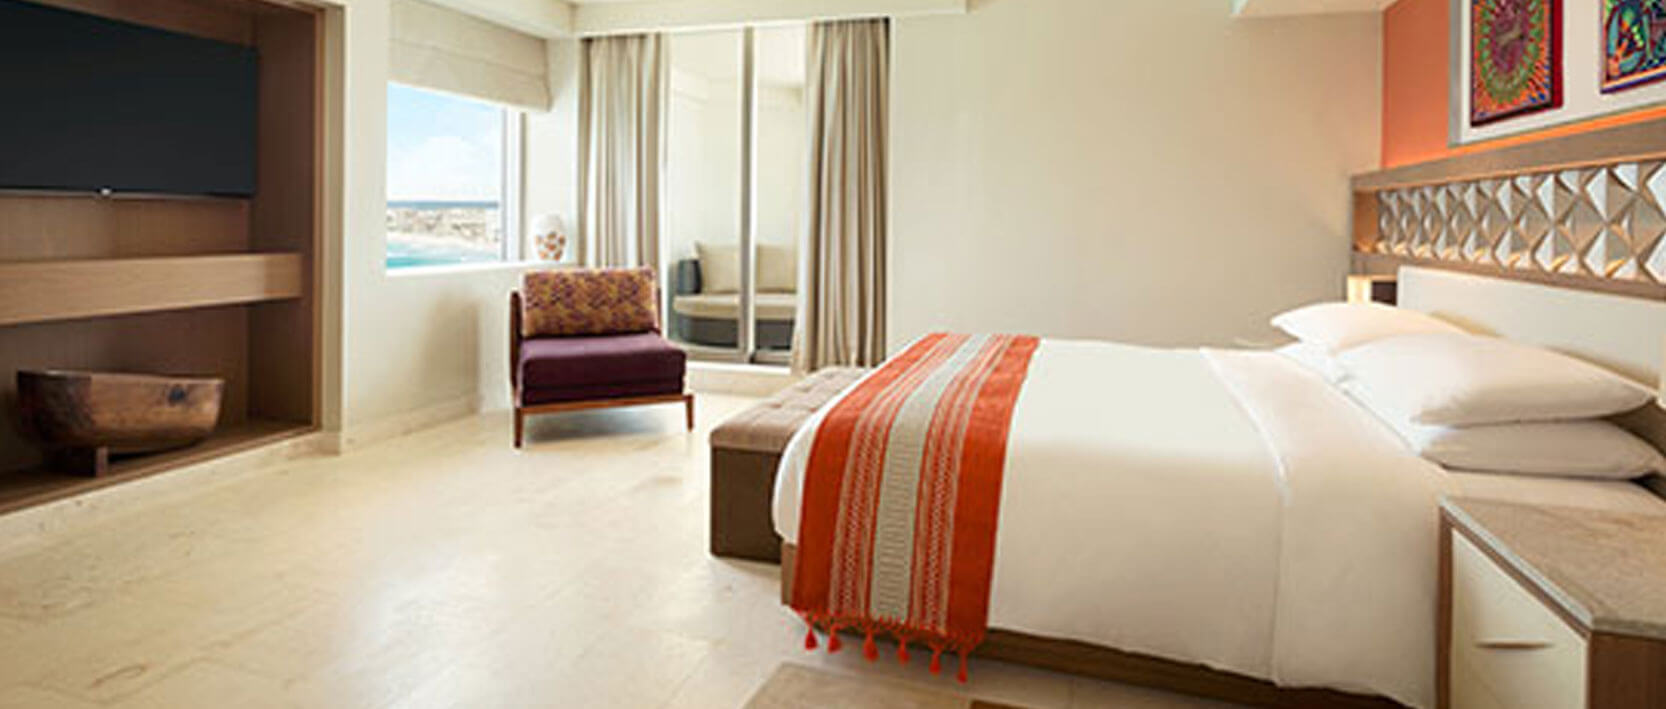 Hyatt Ziva Cancun Accommodations - Club Ocean Front Master Suite